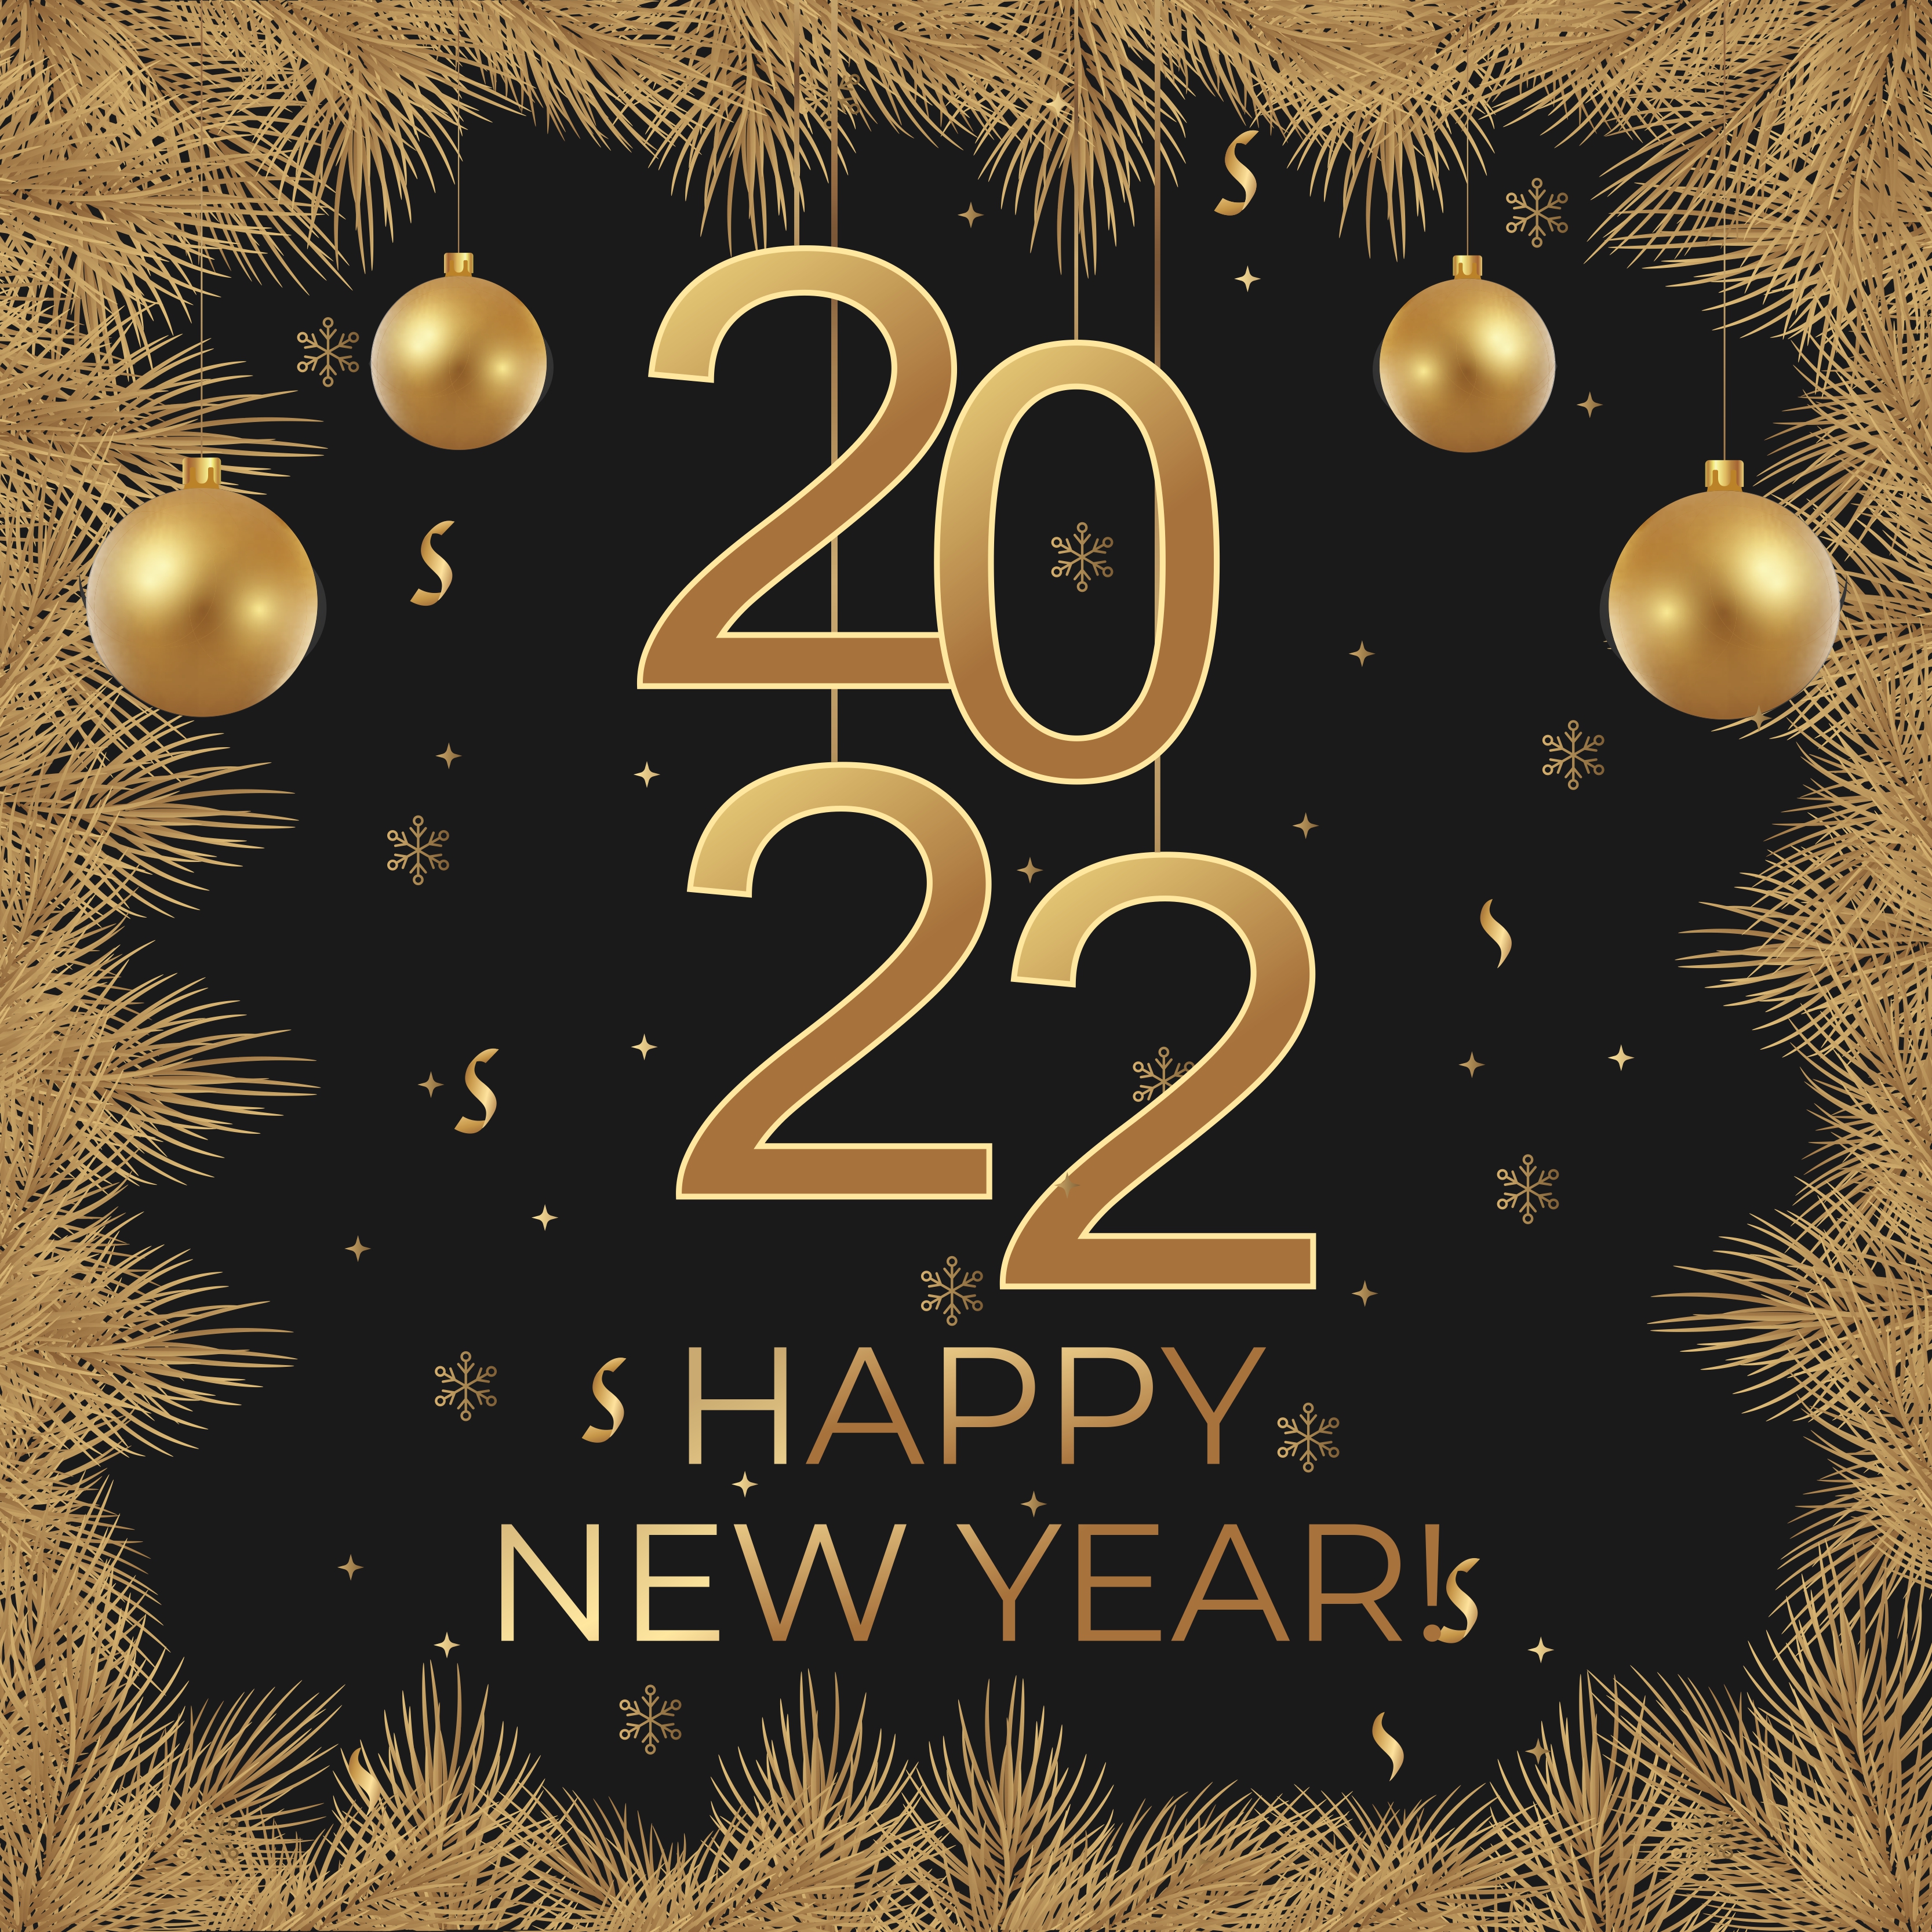 Download Happy 2022 new year banner background template | CorelDraw Design  (Download Free CDR, Vector, Stock Images, Tutorials, Tips & Tricks)